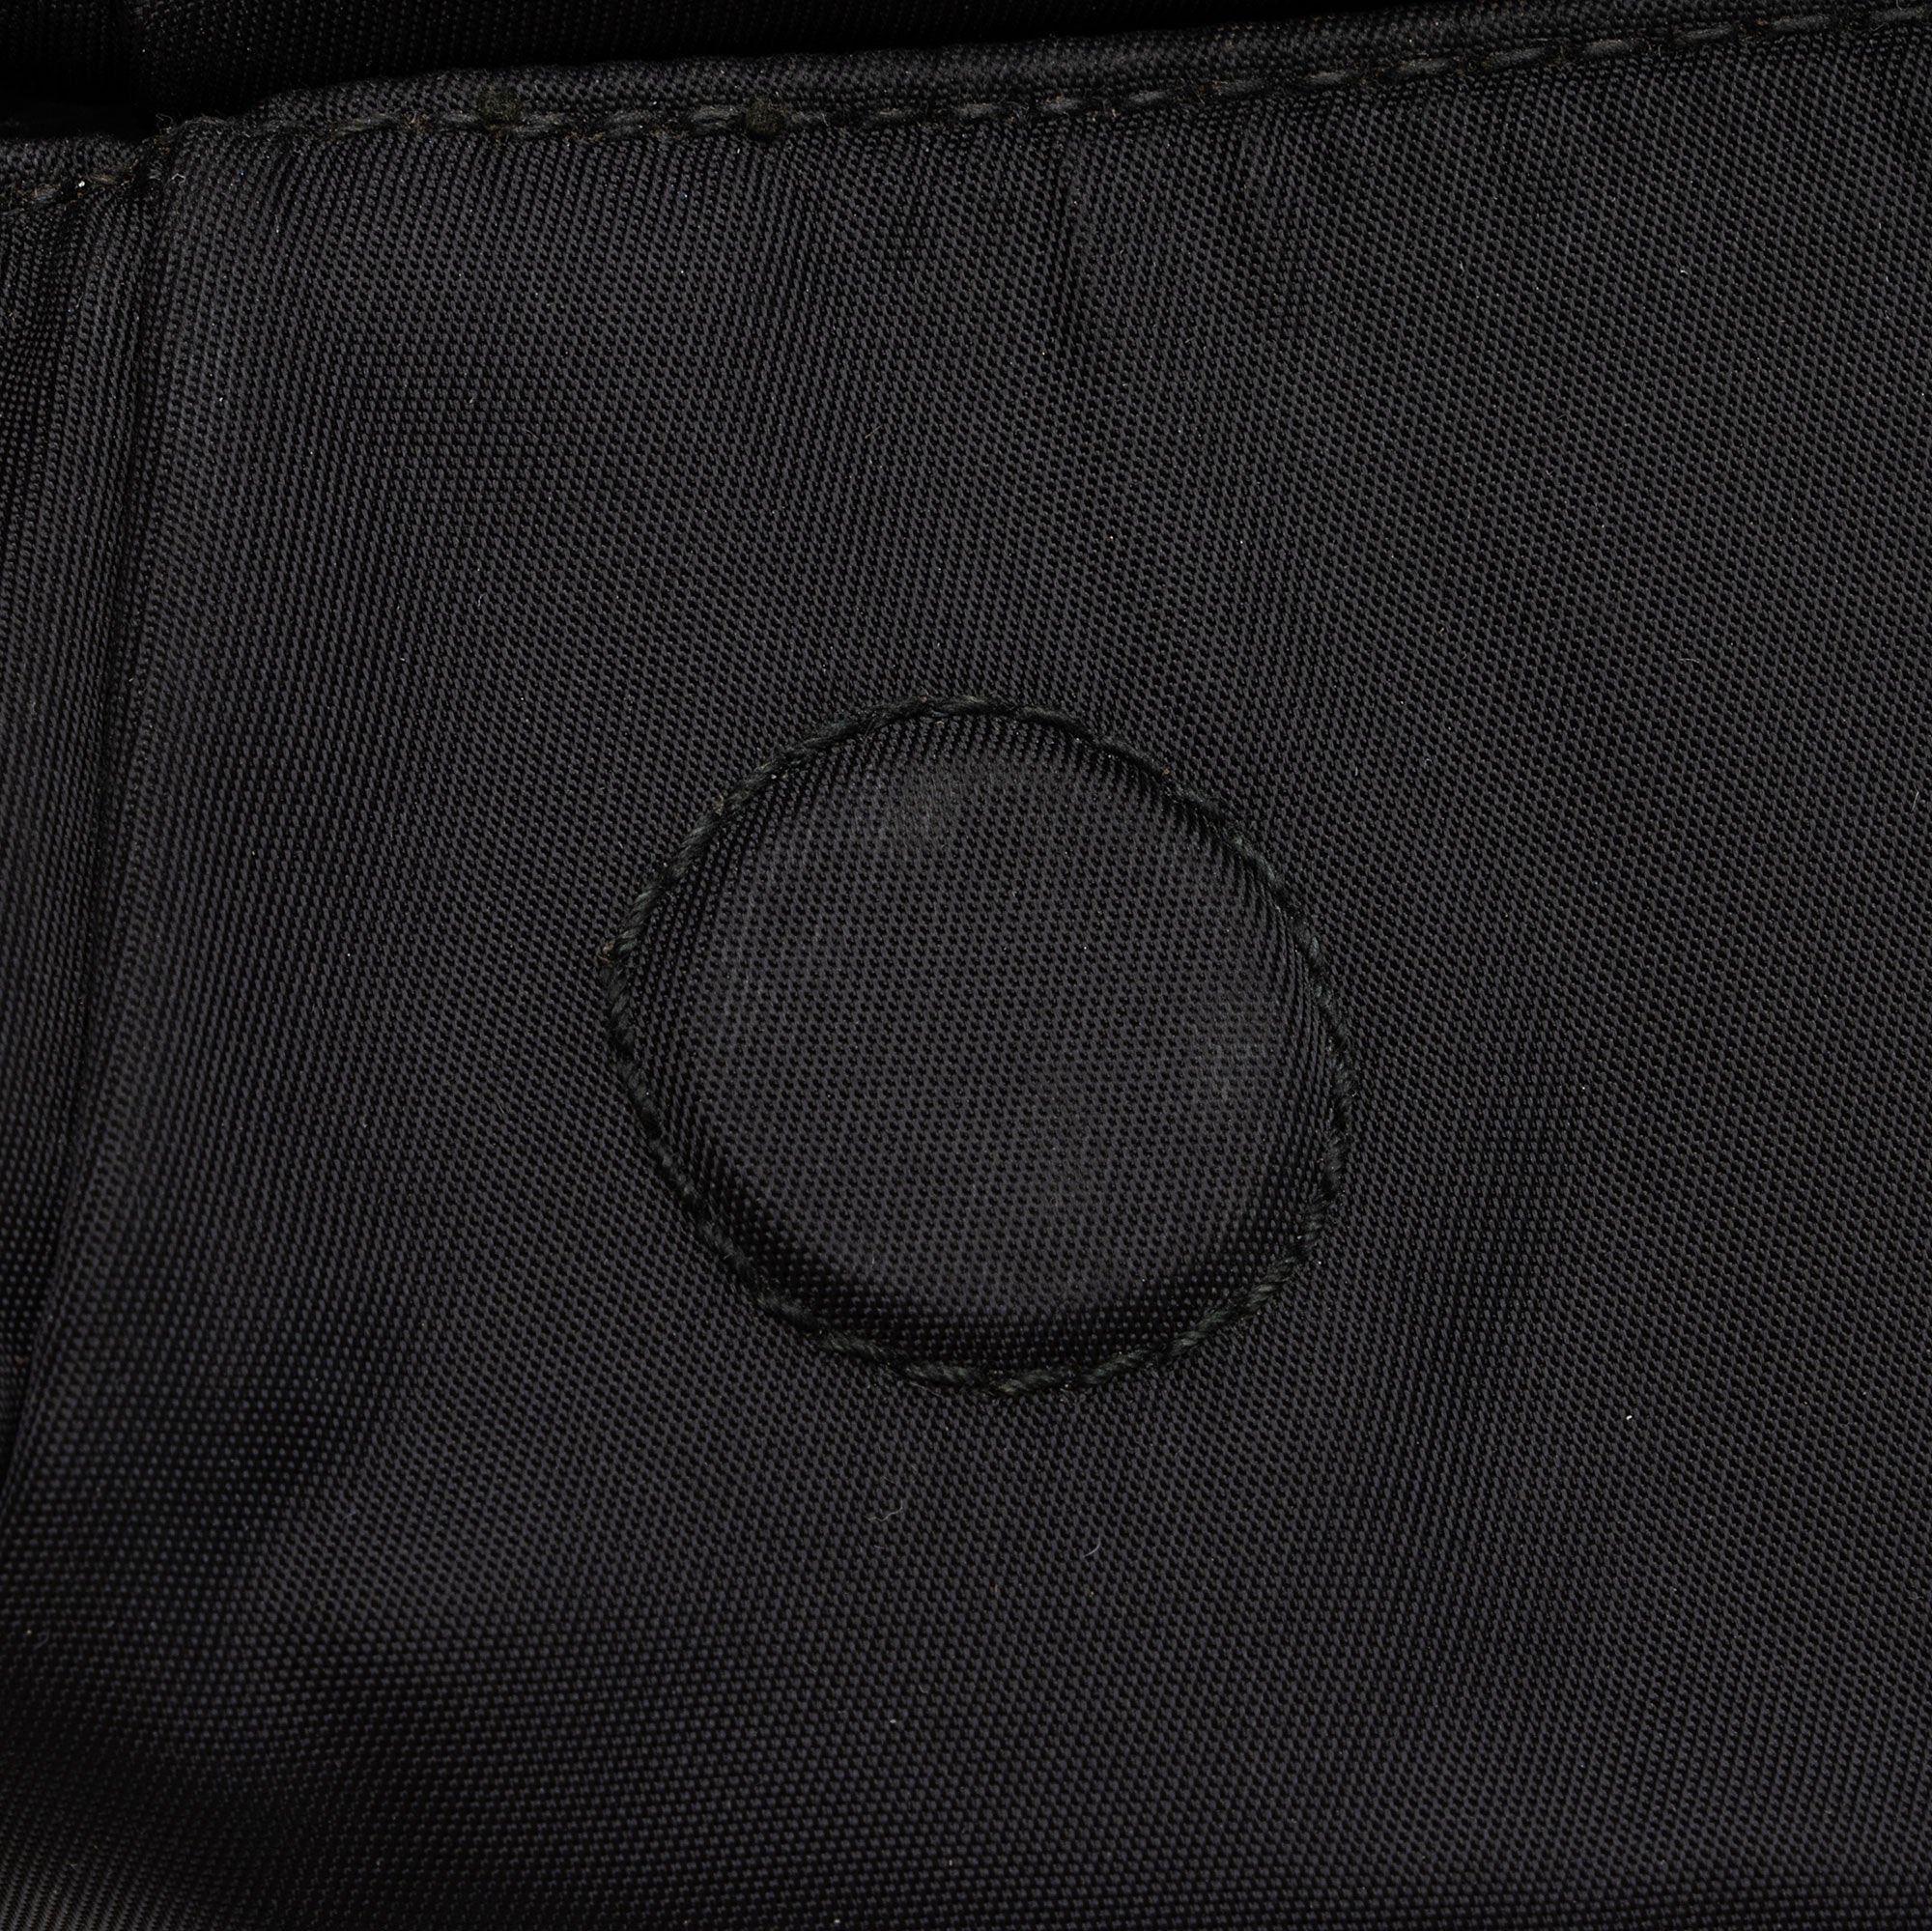 Fendi Vintage Nylon FF Small Flap Bag